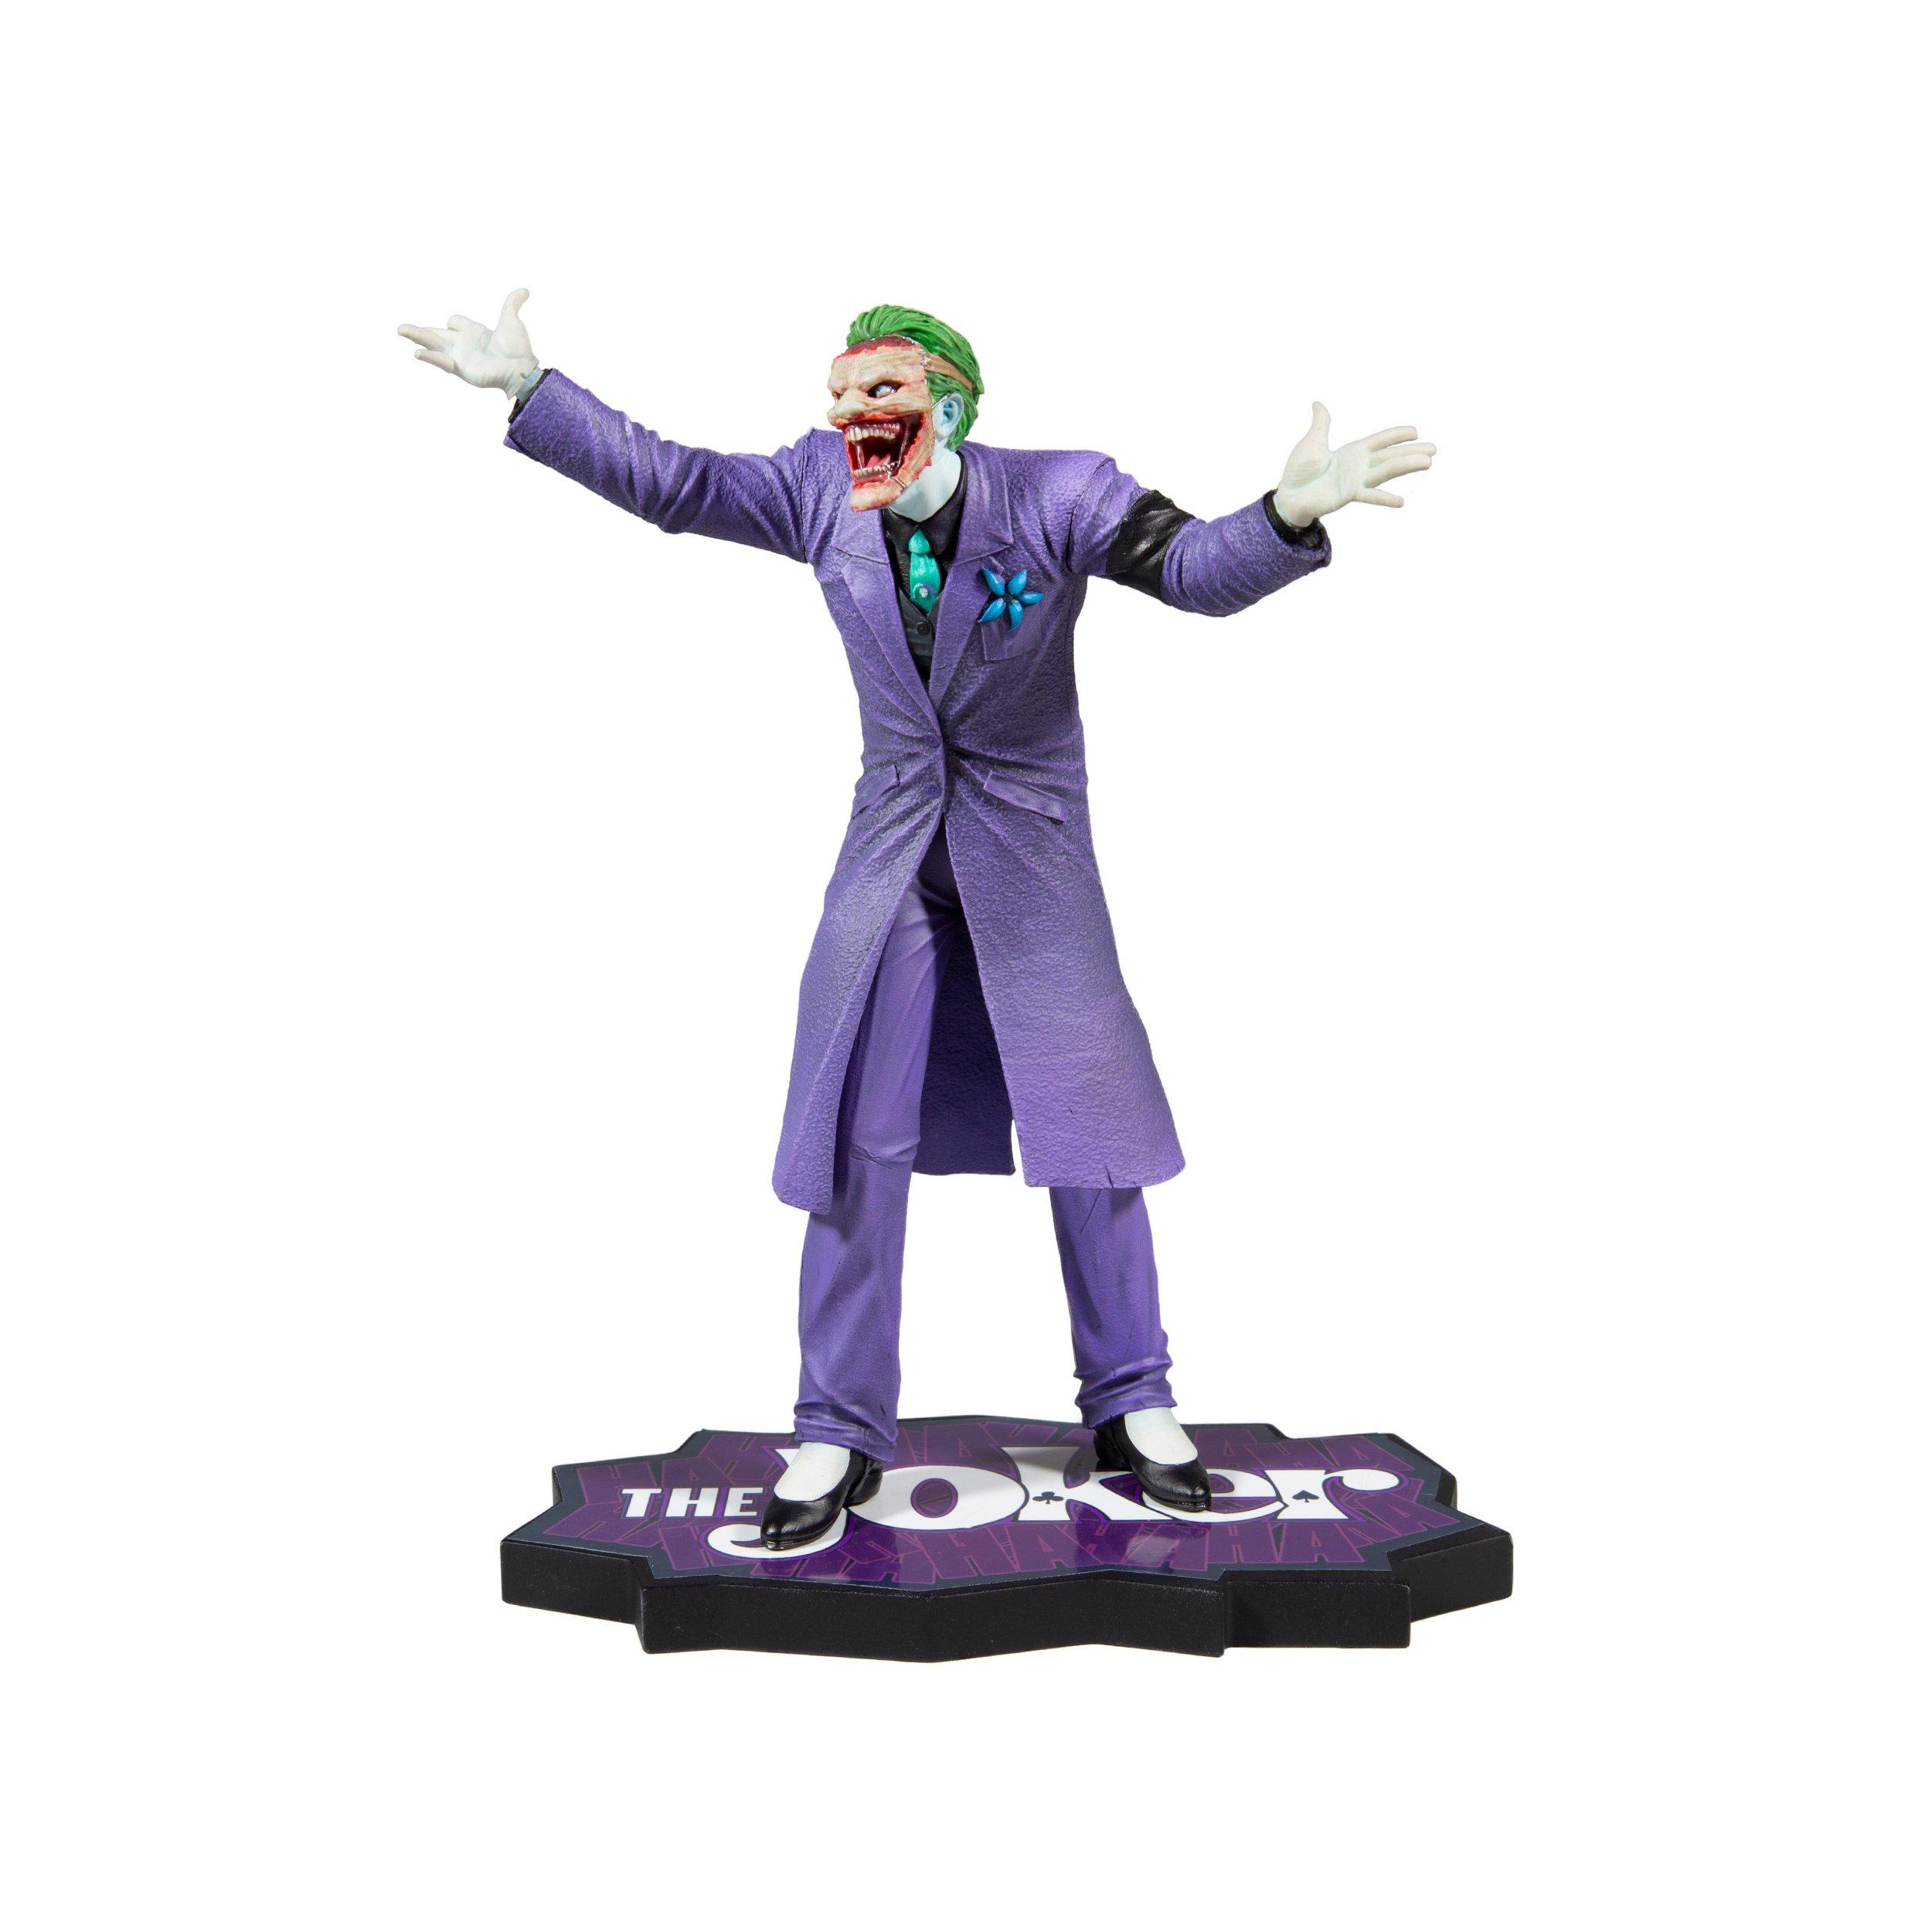 Batman Vs Joker Statue Action Figure Toy Model Toys Anime Batman Joker Figurine